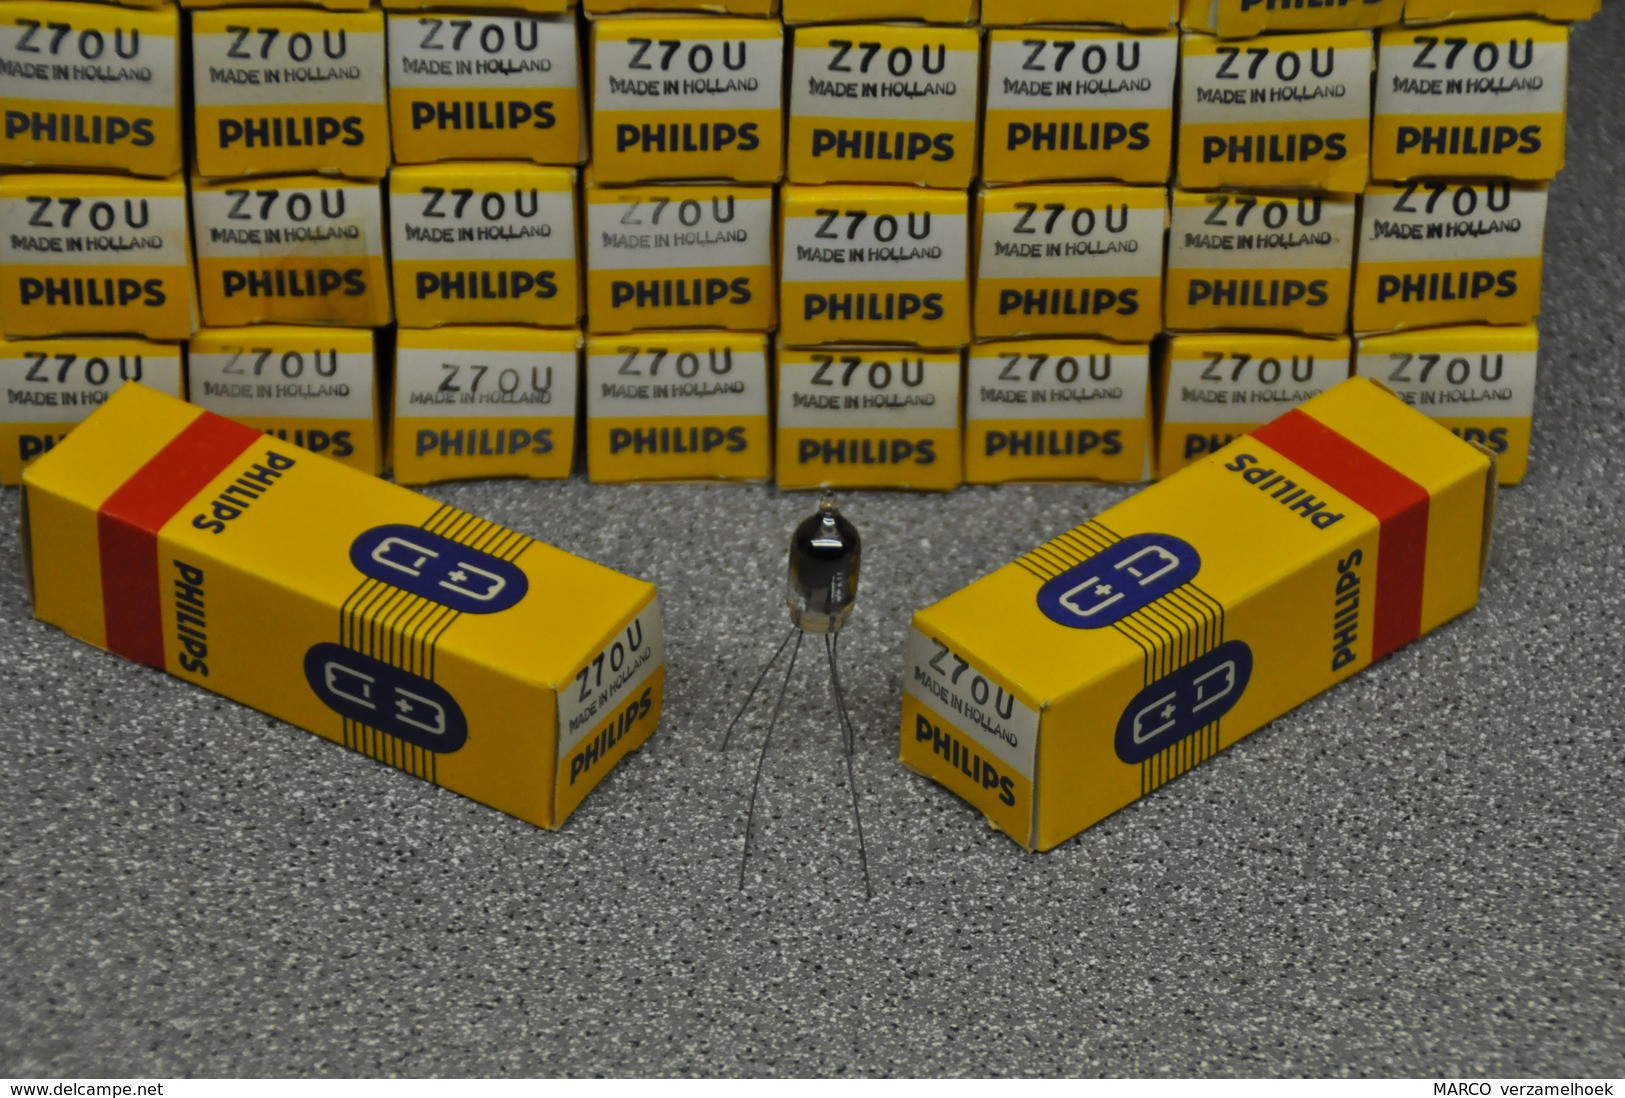 Philips Buis-röhre-tube Z70U - (7710 - GR43) Thyratron Tube New (jukebox) Neonbuisje Glimmröhre - Tubos